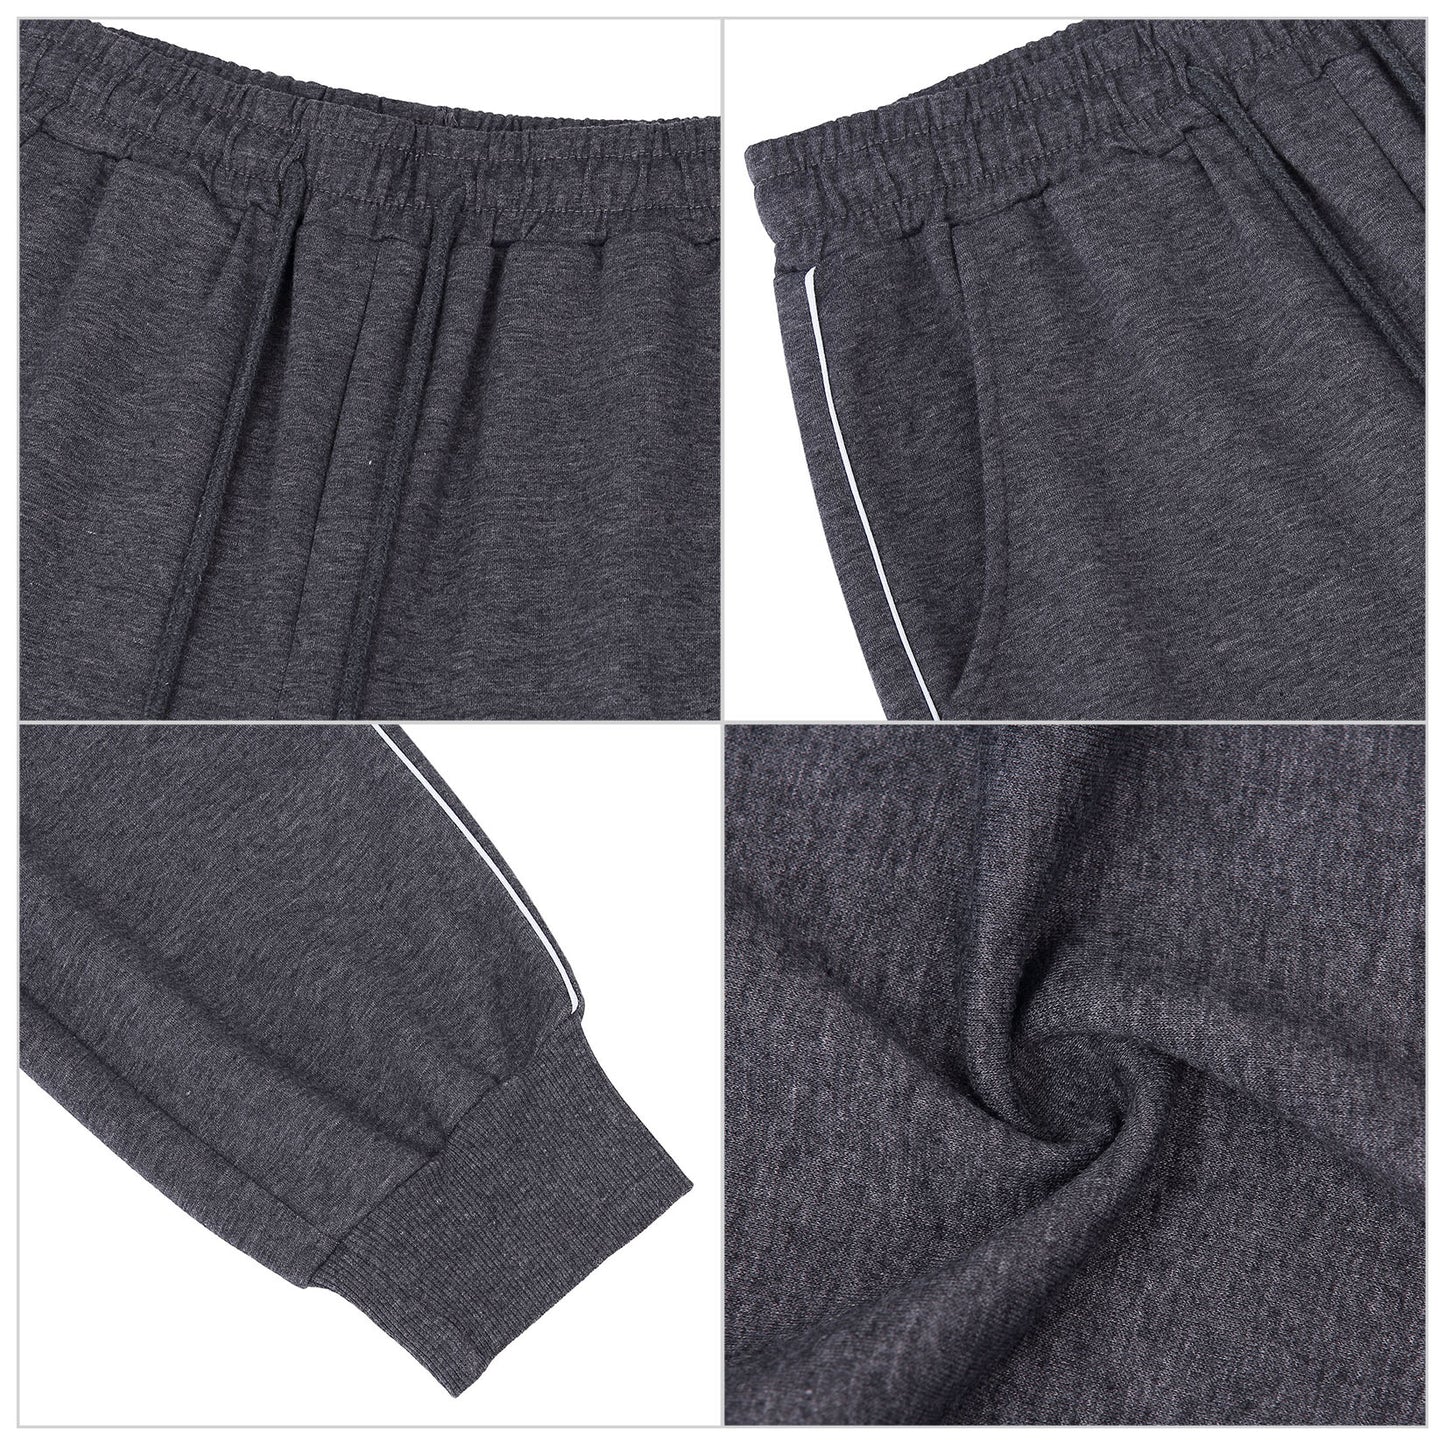 YESFASHION Women's Drawing Pockets Casual Sports Pants Dark Grey